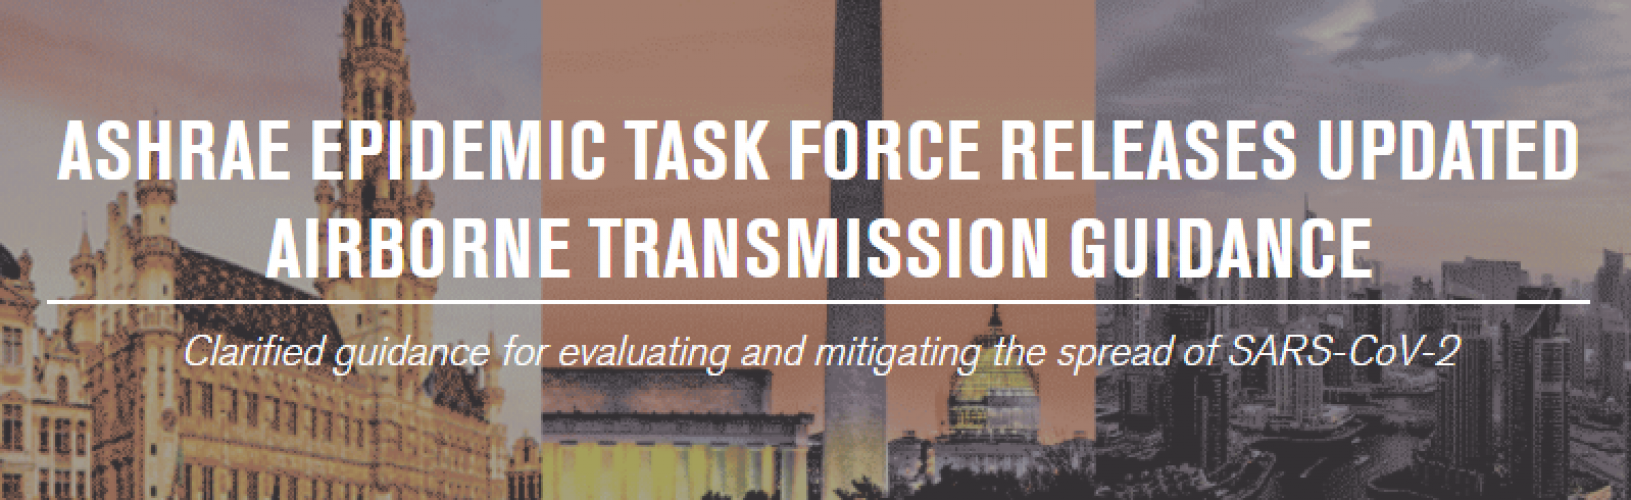 ASHRAE Epidemic Task Force Releases Updated Airborne Transmission Guidance